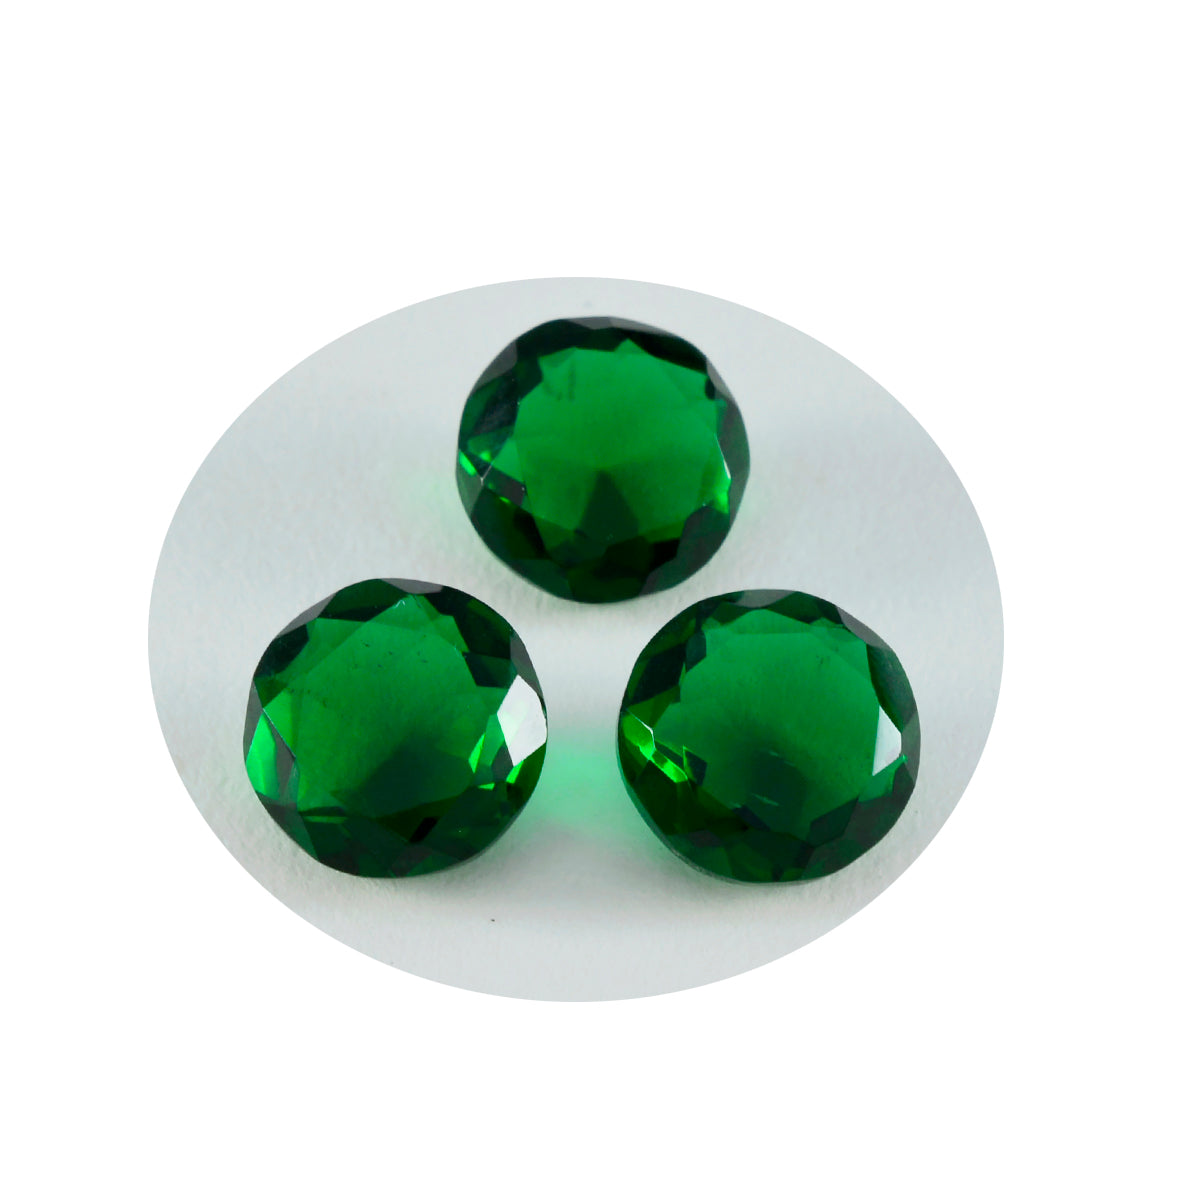 Riyogems 1PC Green Emerald CZ Faceted 12x12 mm Round Shape Good Quality Gem